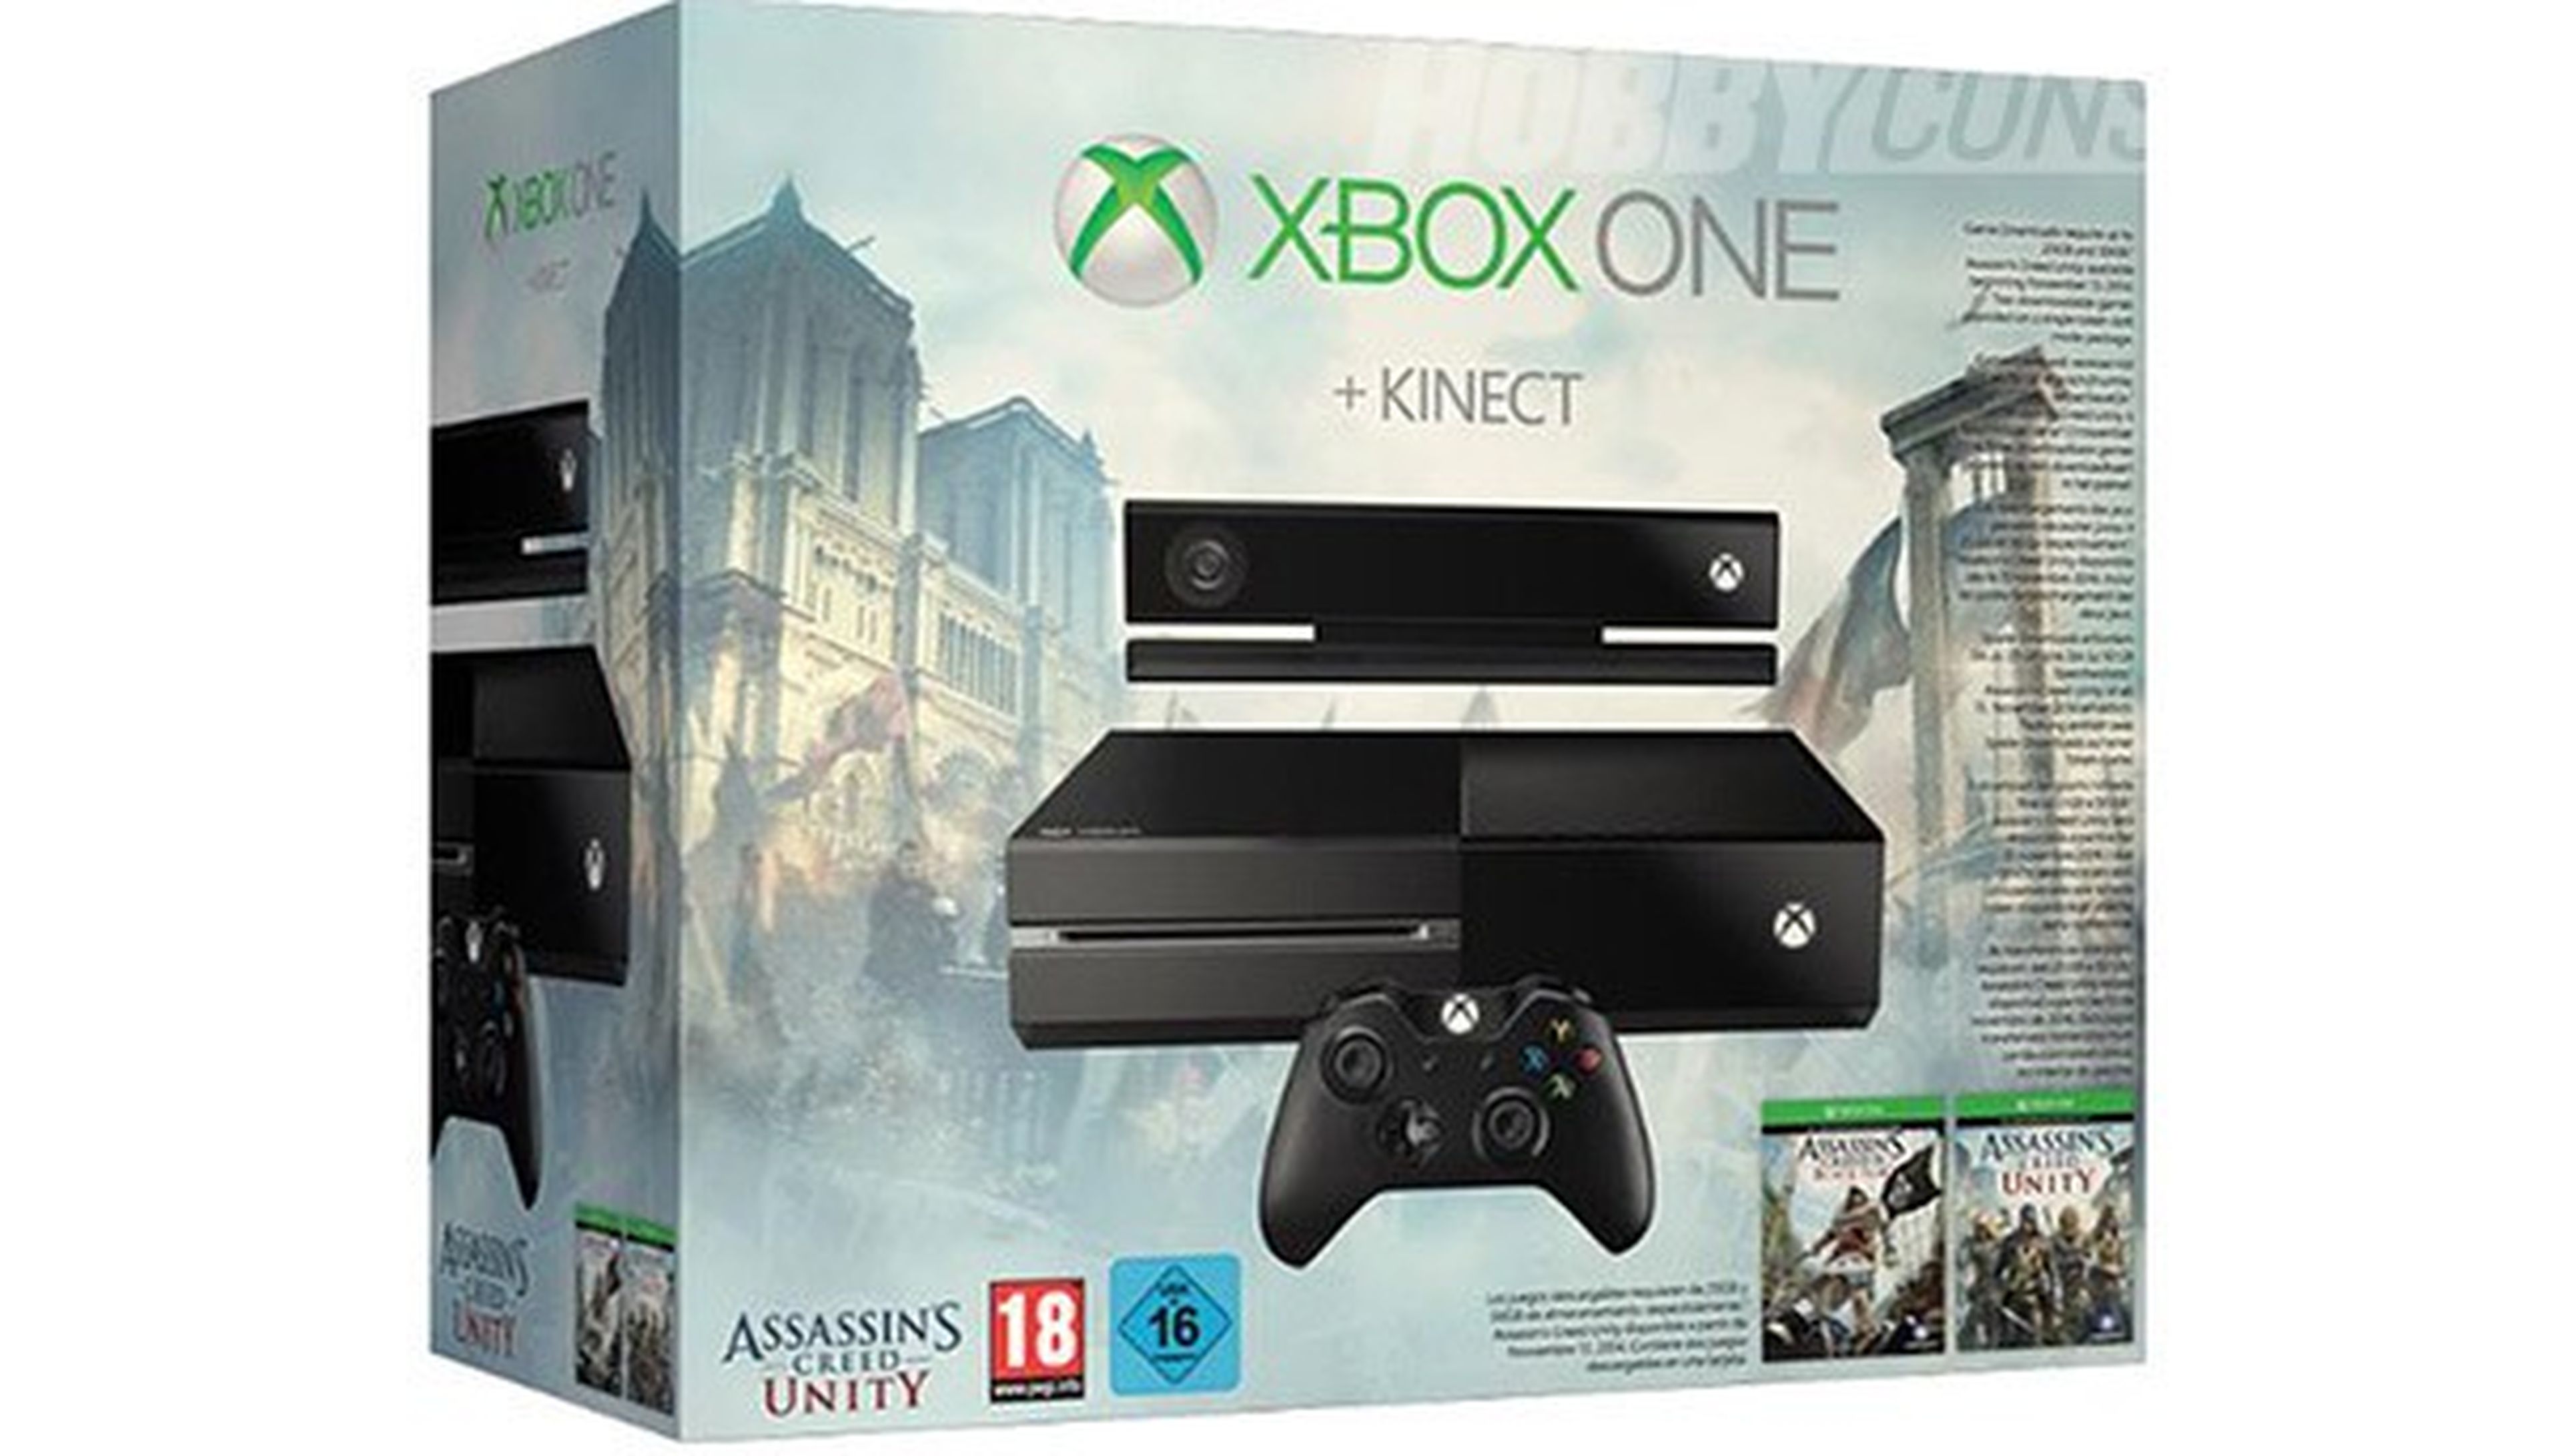 Filtrado un pack de Xbox One con Assassin's Creed Unity y Assassin's Creed IV Black Flag